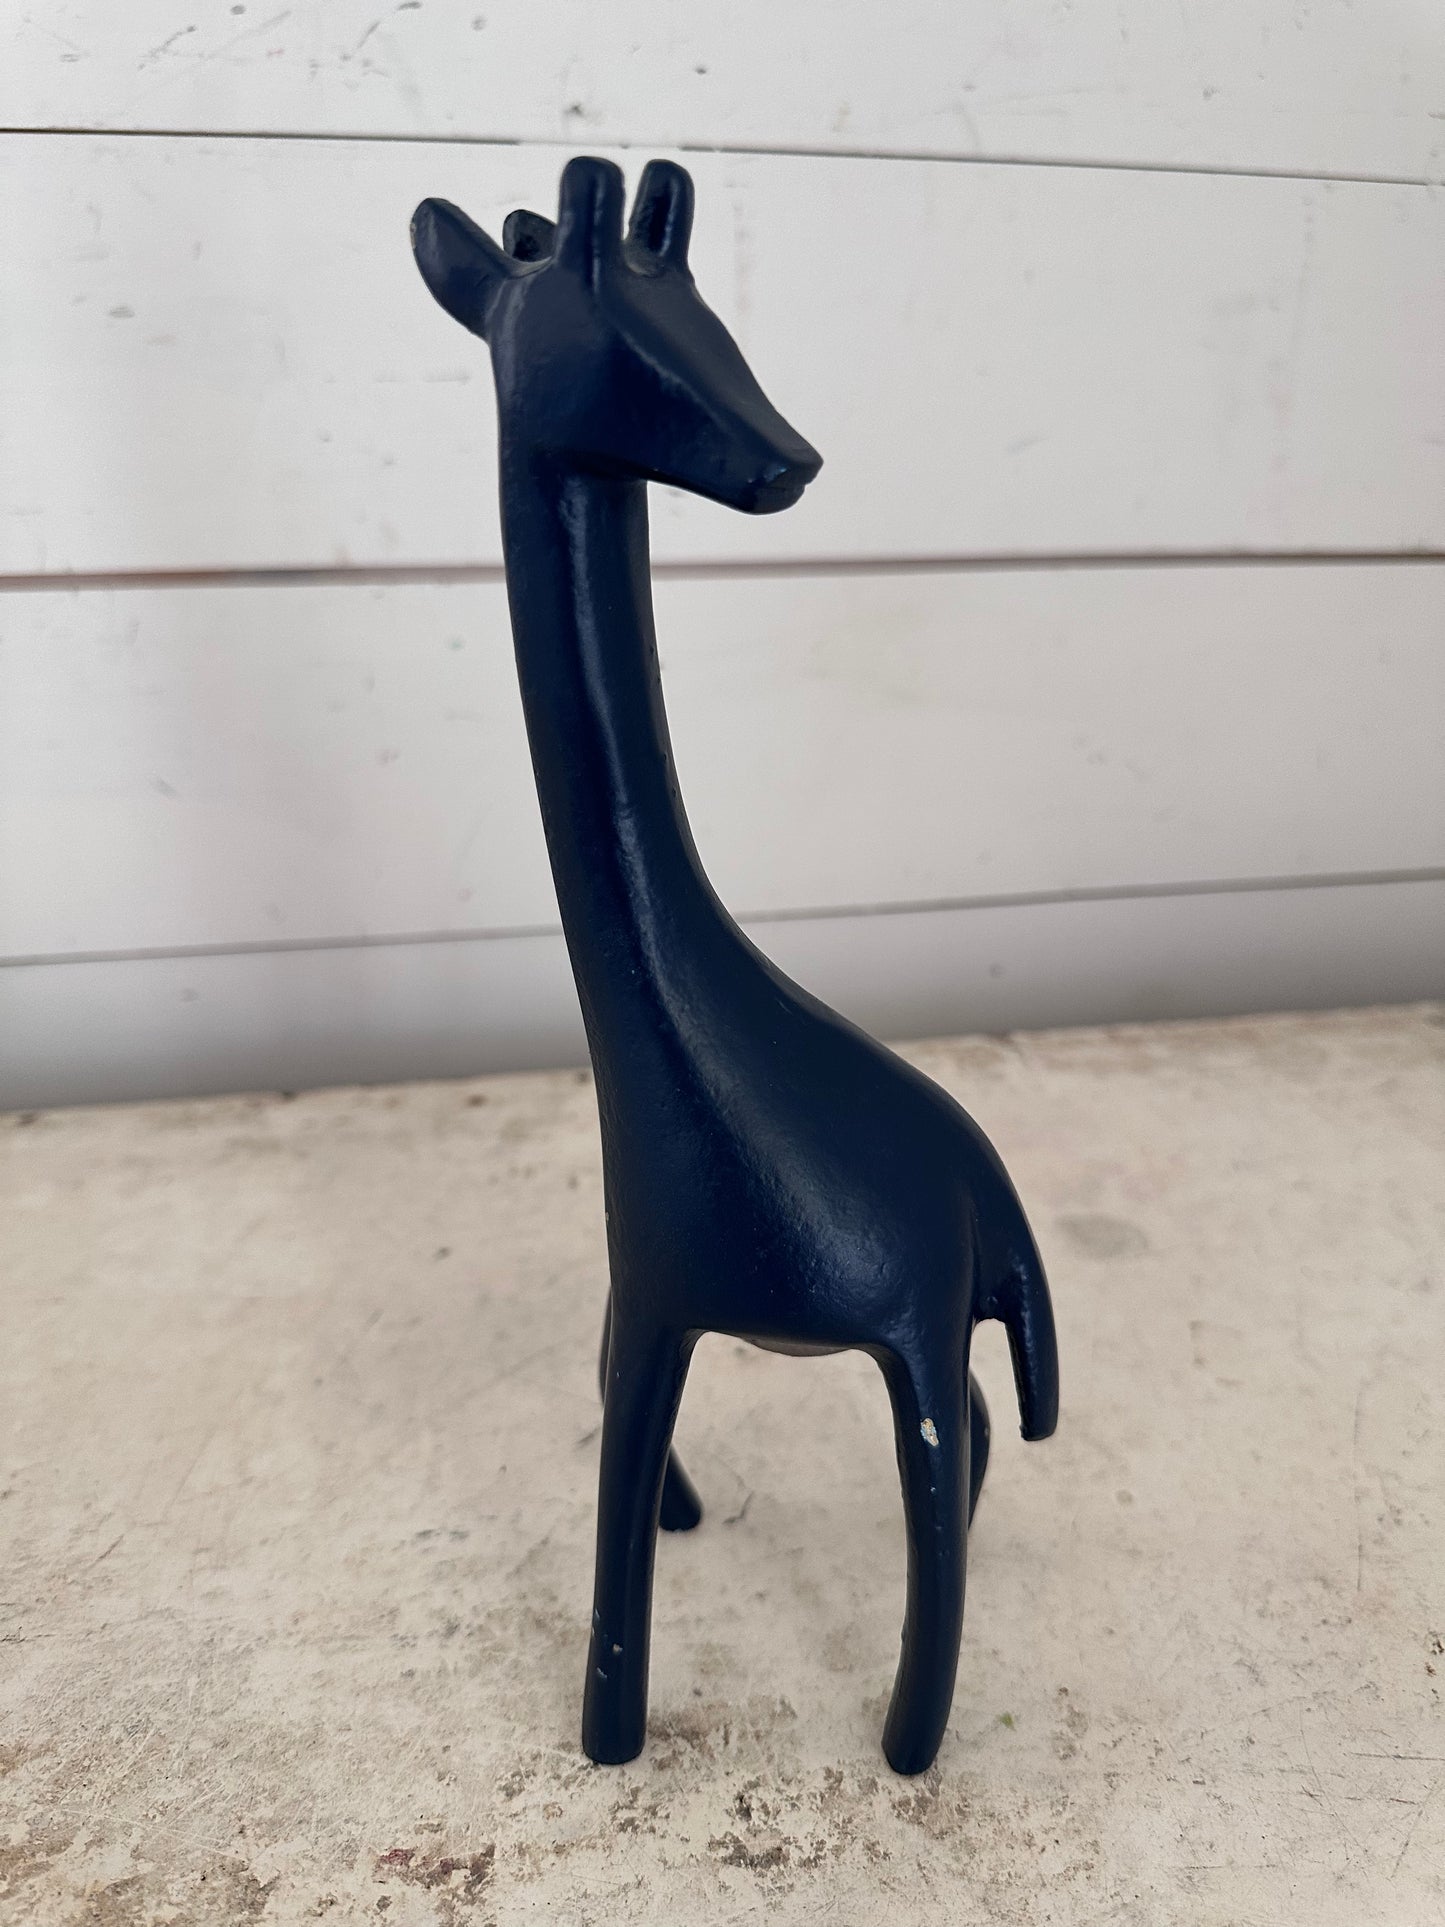 Metal Giraffe - will remove paint